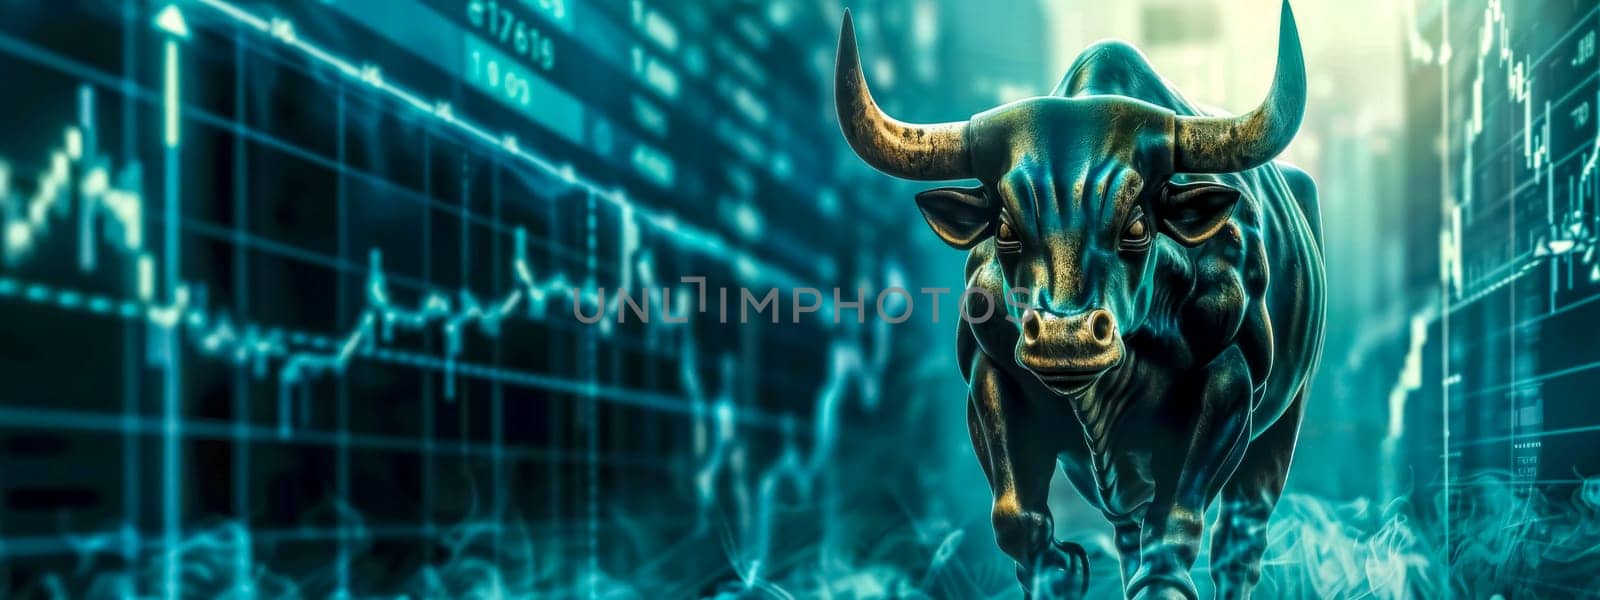 Digital illustration of a bullish symbol in the financial market with dynamic stock data backdrop